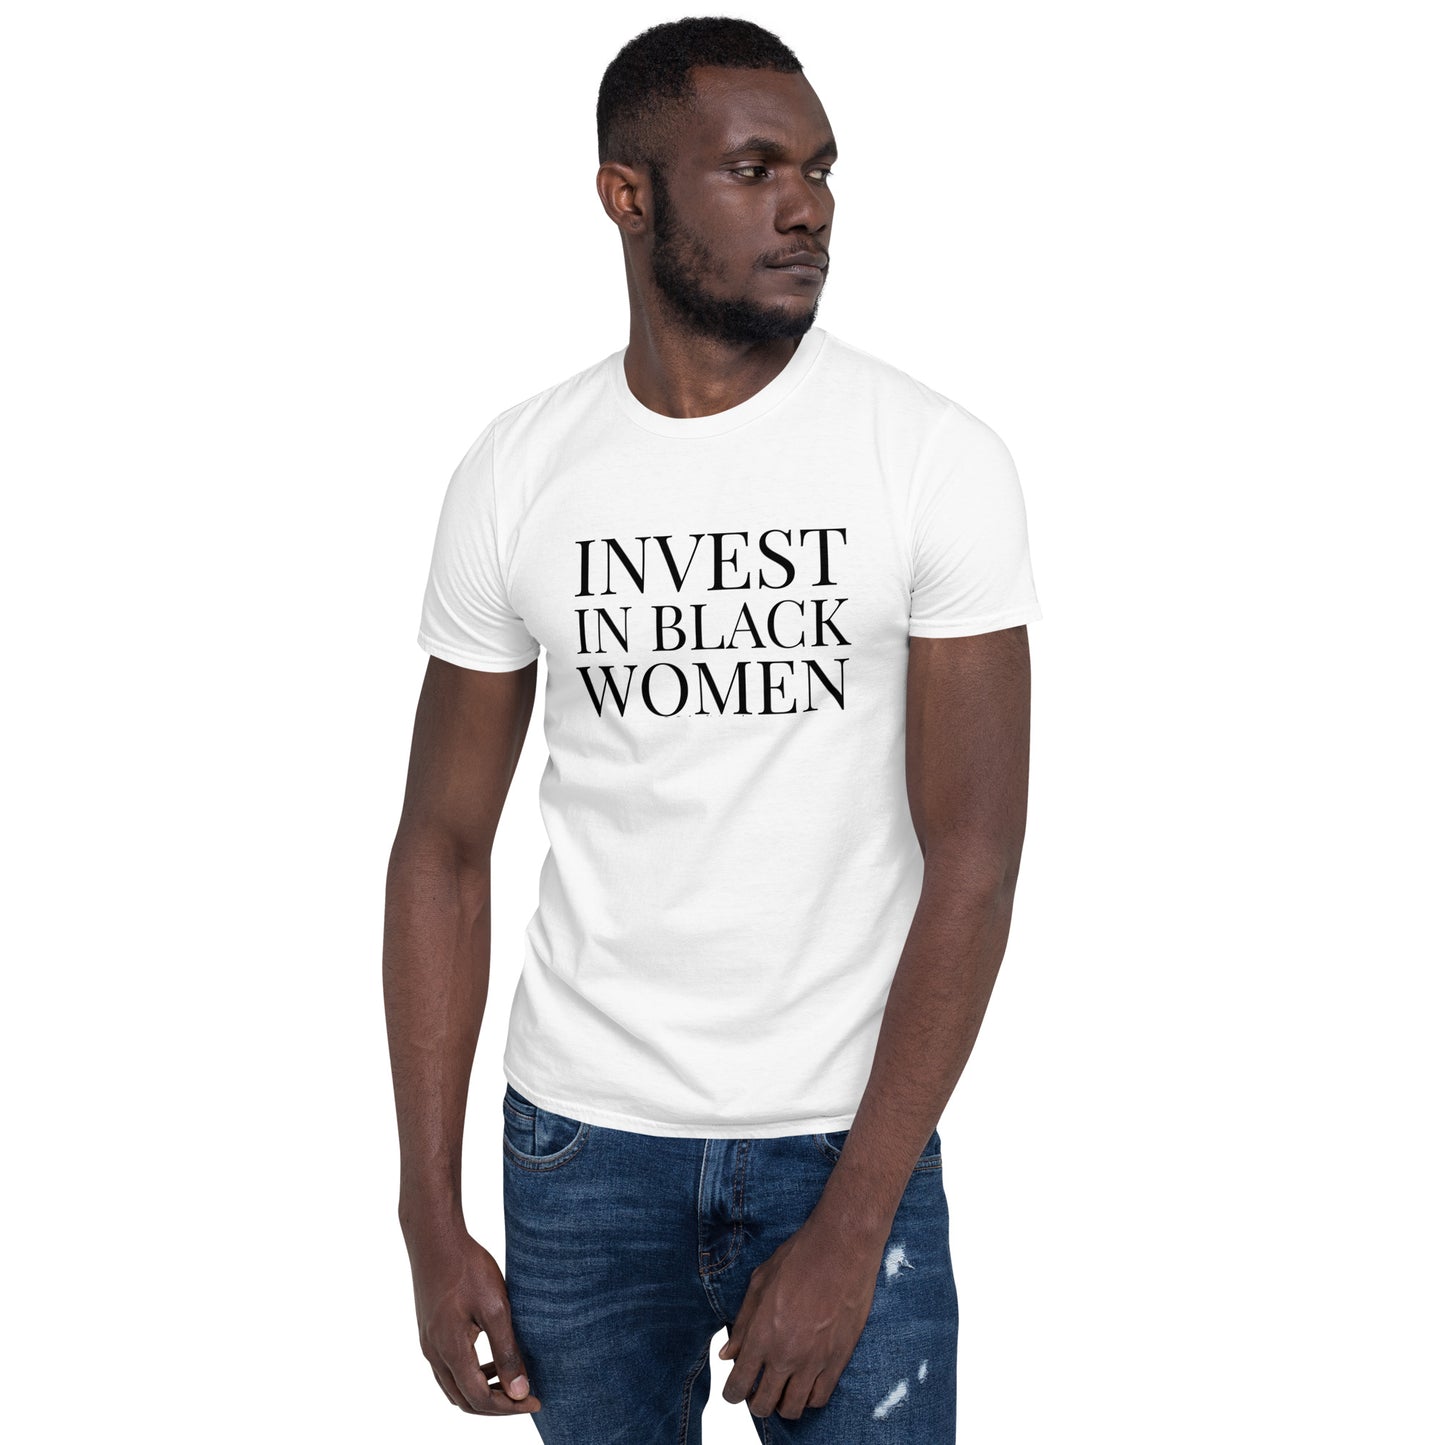 Invest in Black Women - (Unisex) T-Shirt